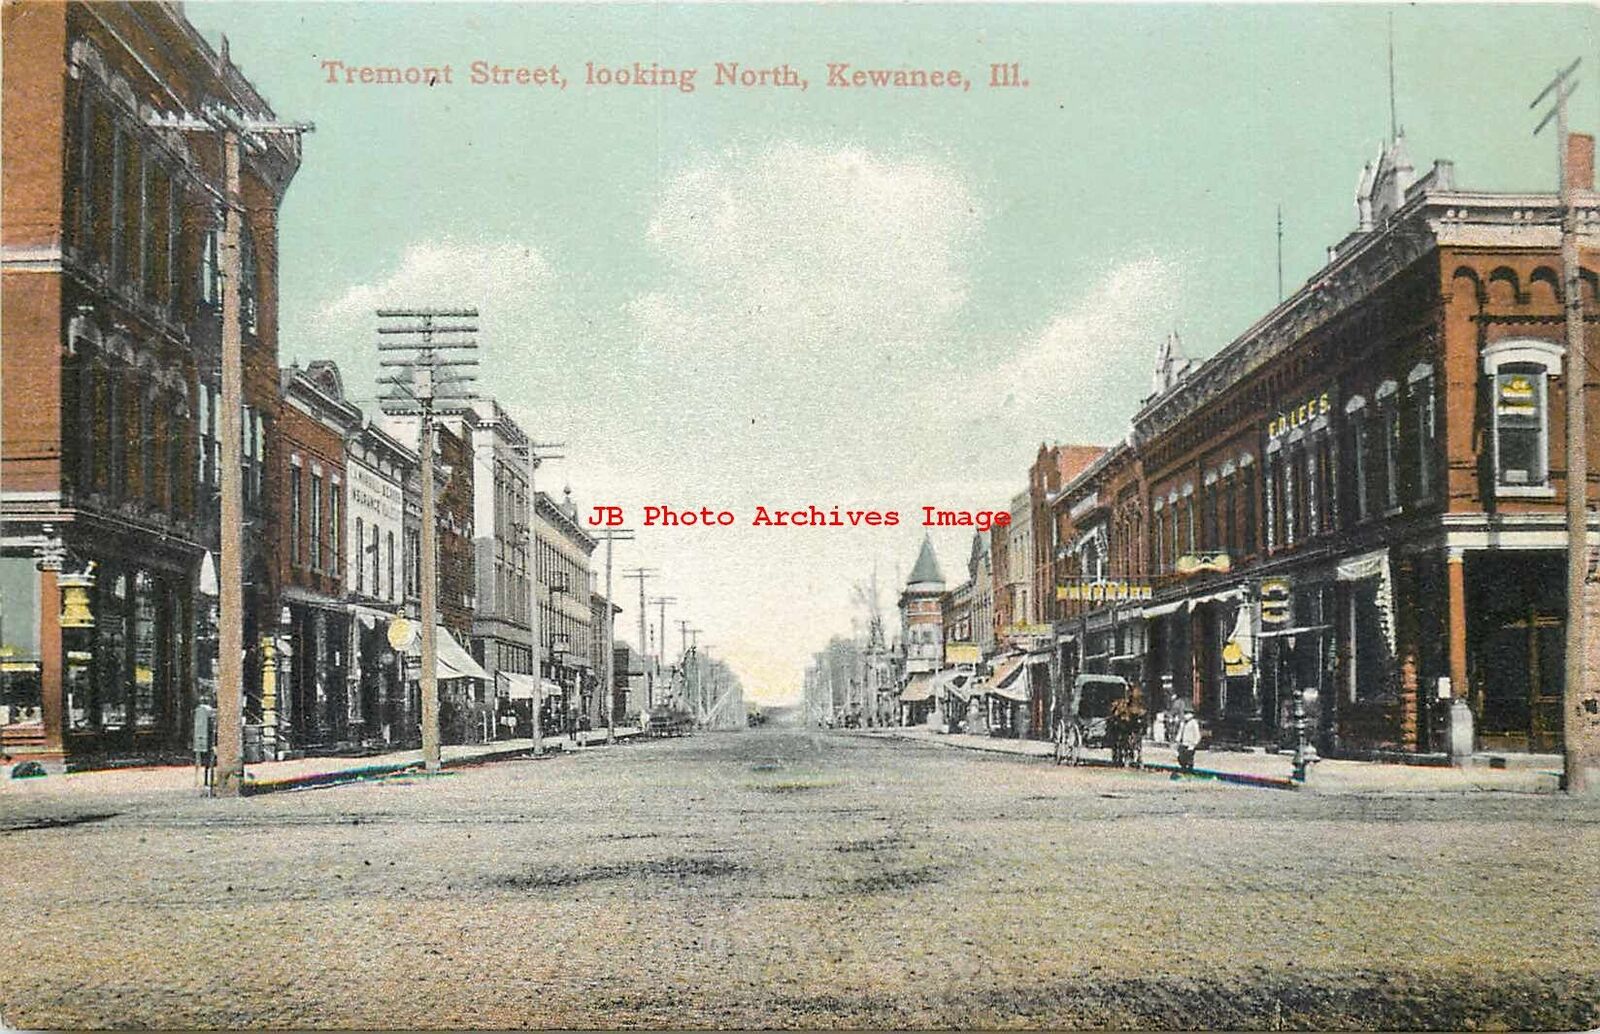 IL, Kewanee, Illinois, Tremont Street, Looking North, Business Section, Kresge